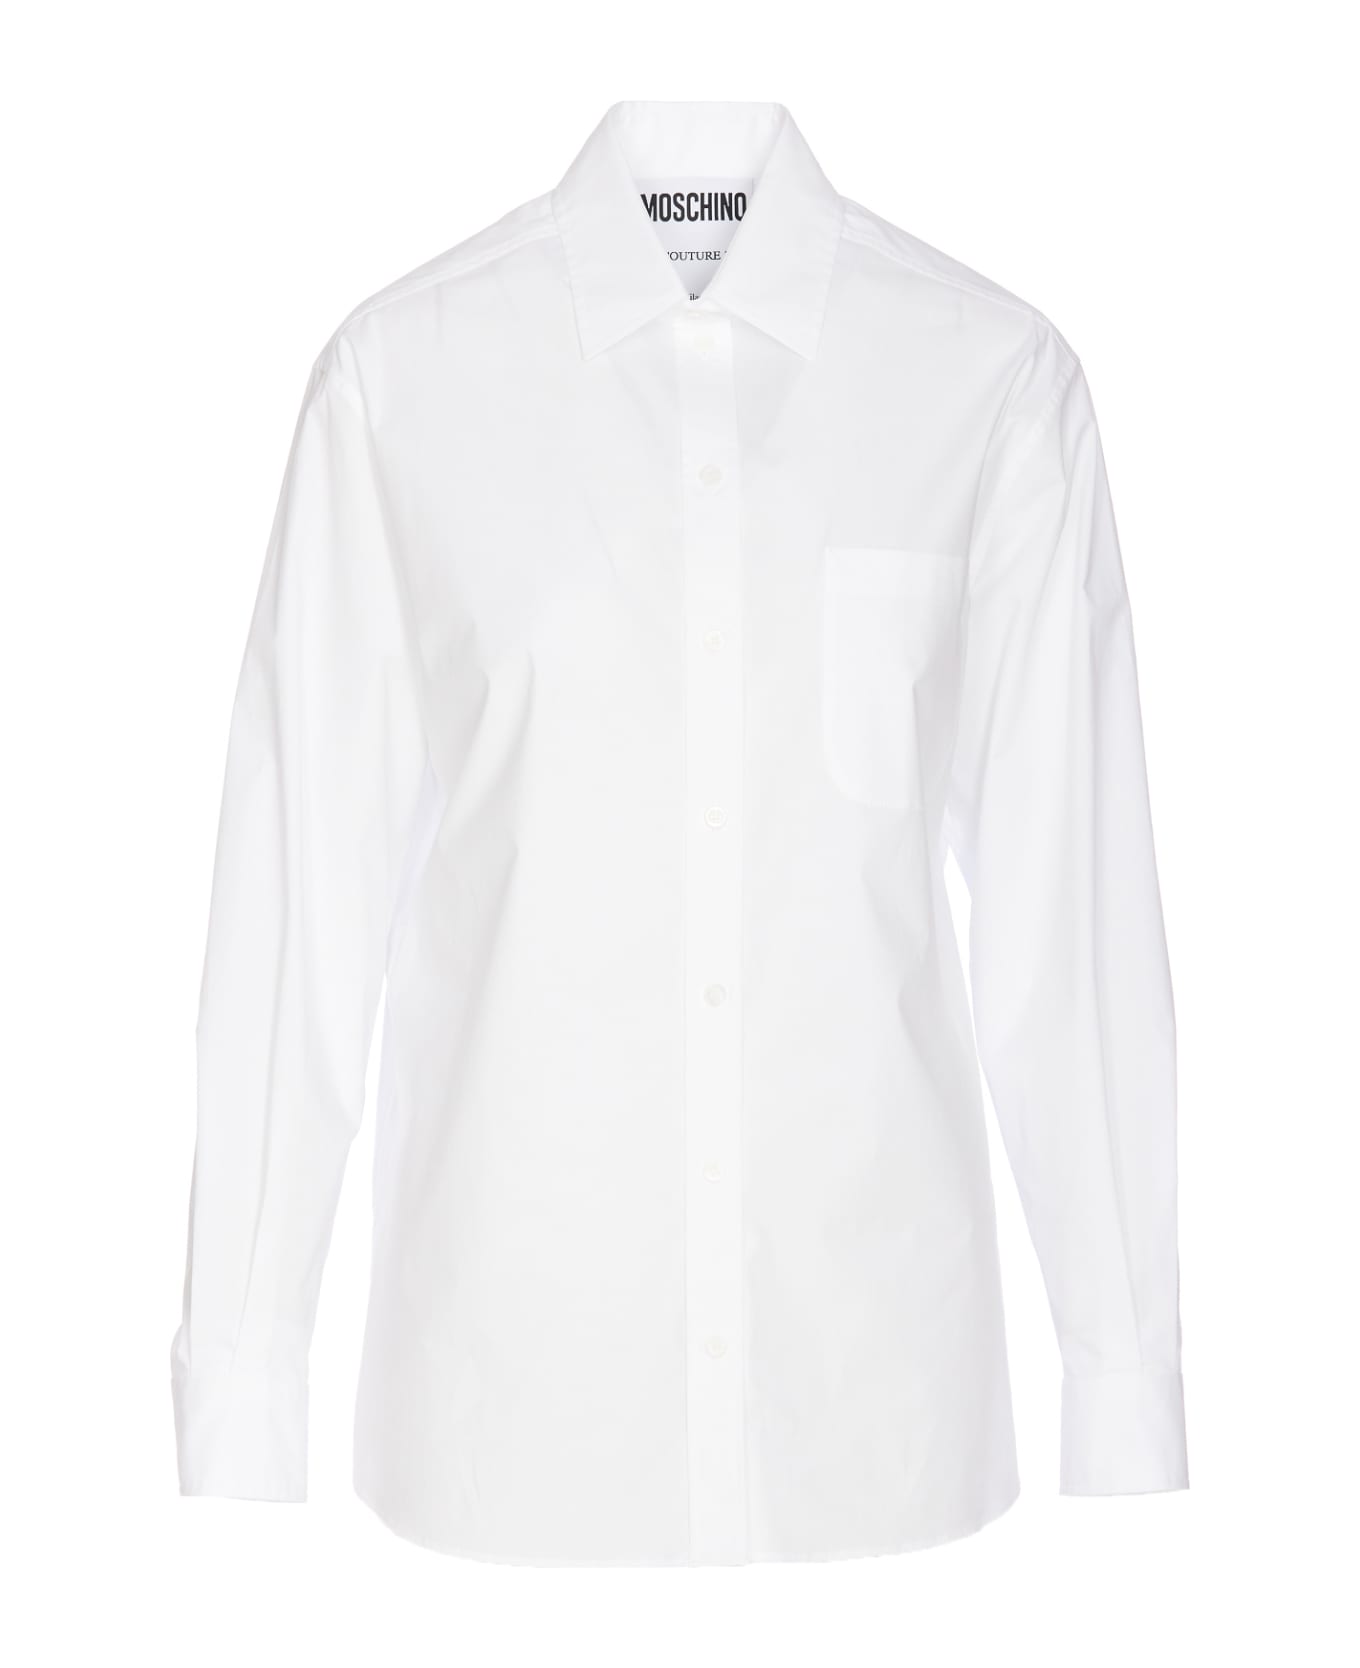 Pinko Pergusa Shirt - White シャツ